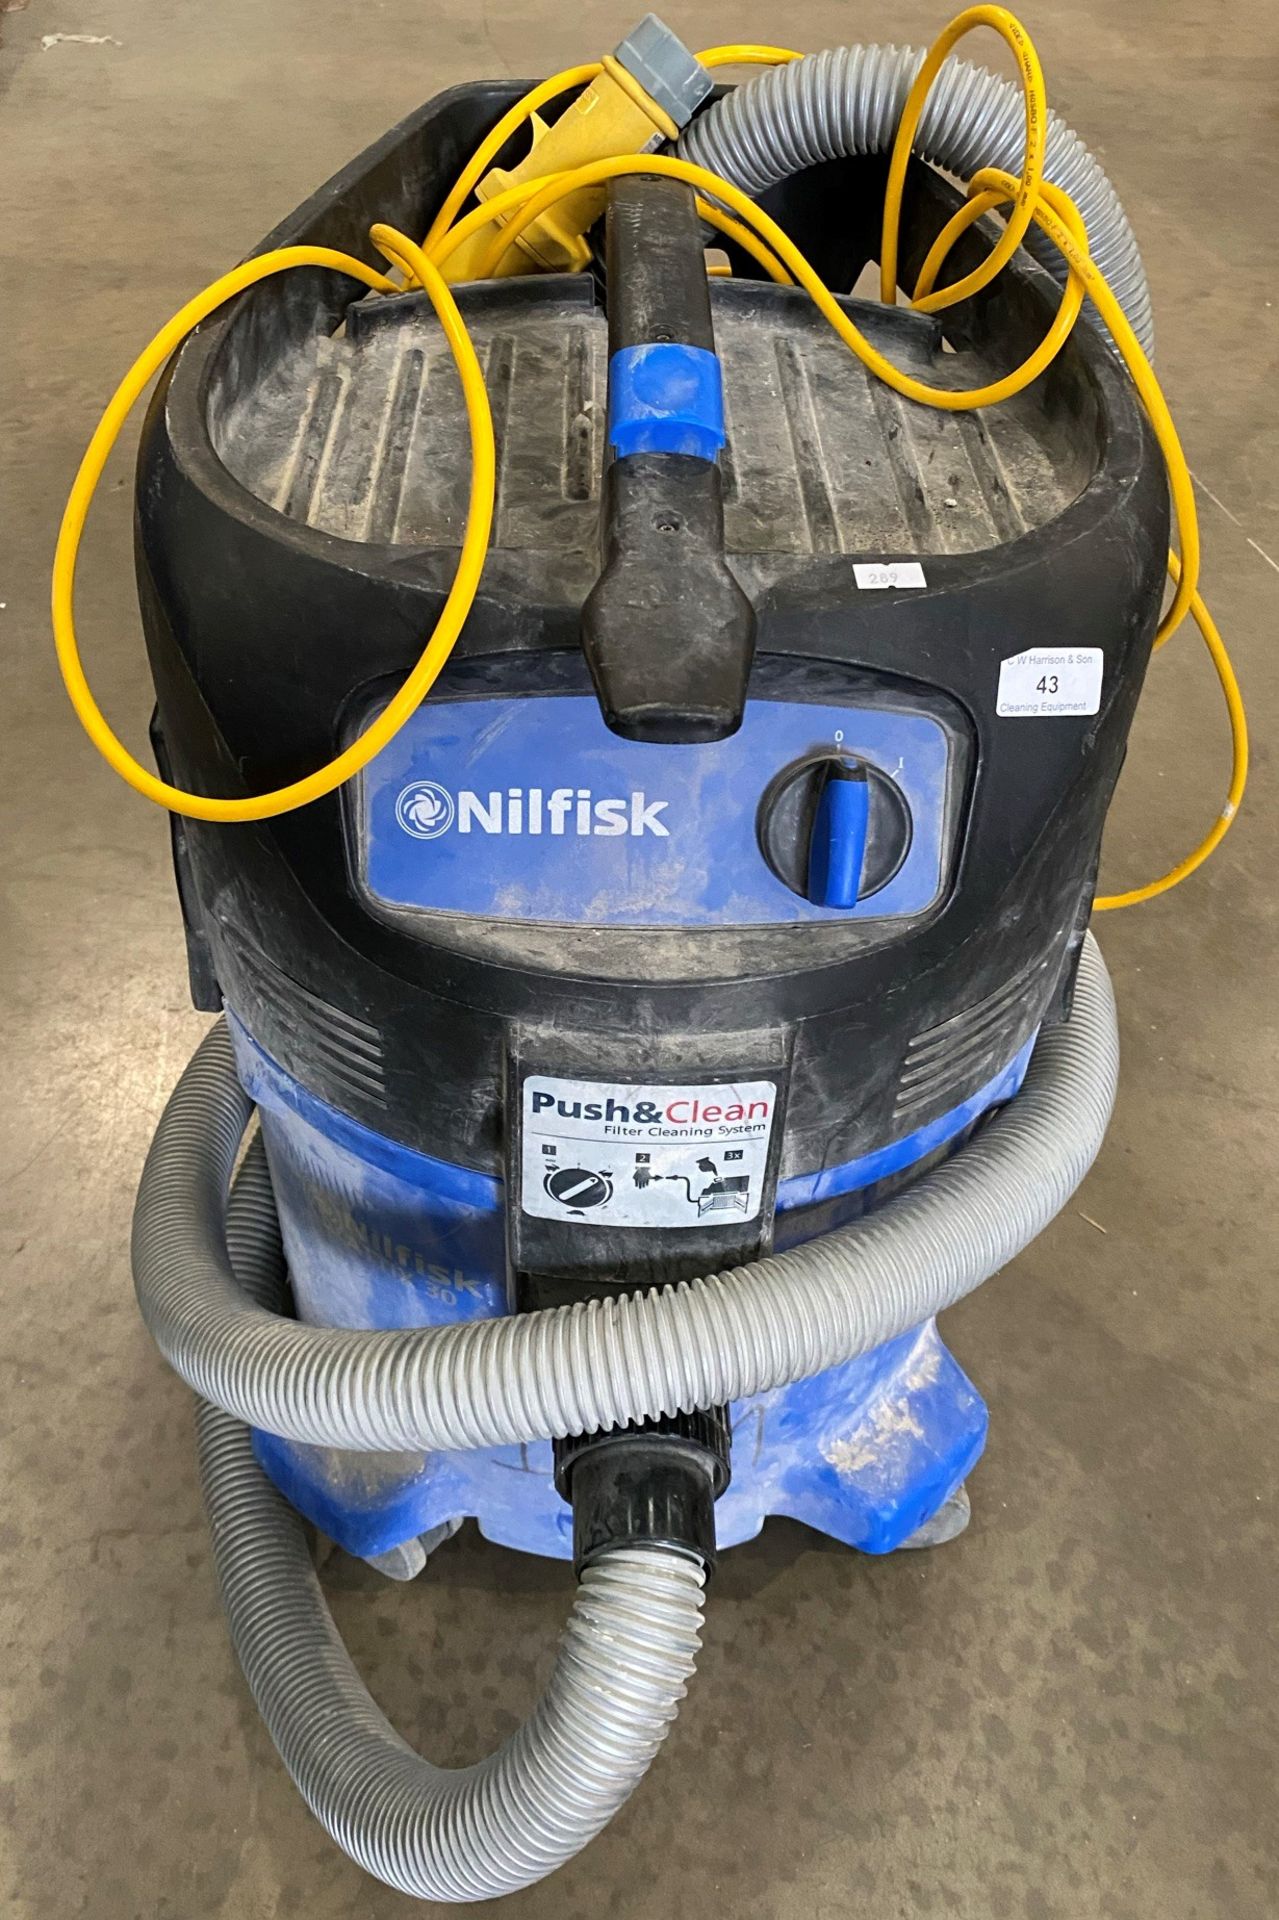 A Nilfisk ATTIX30-01PC 110V commercial vacuum